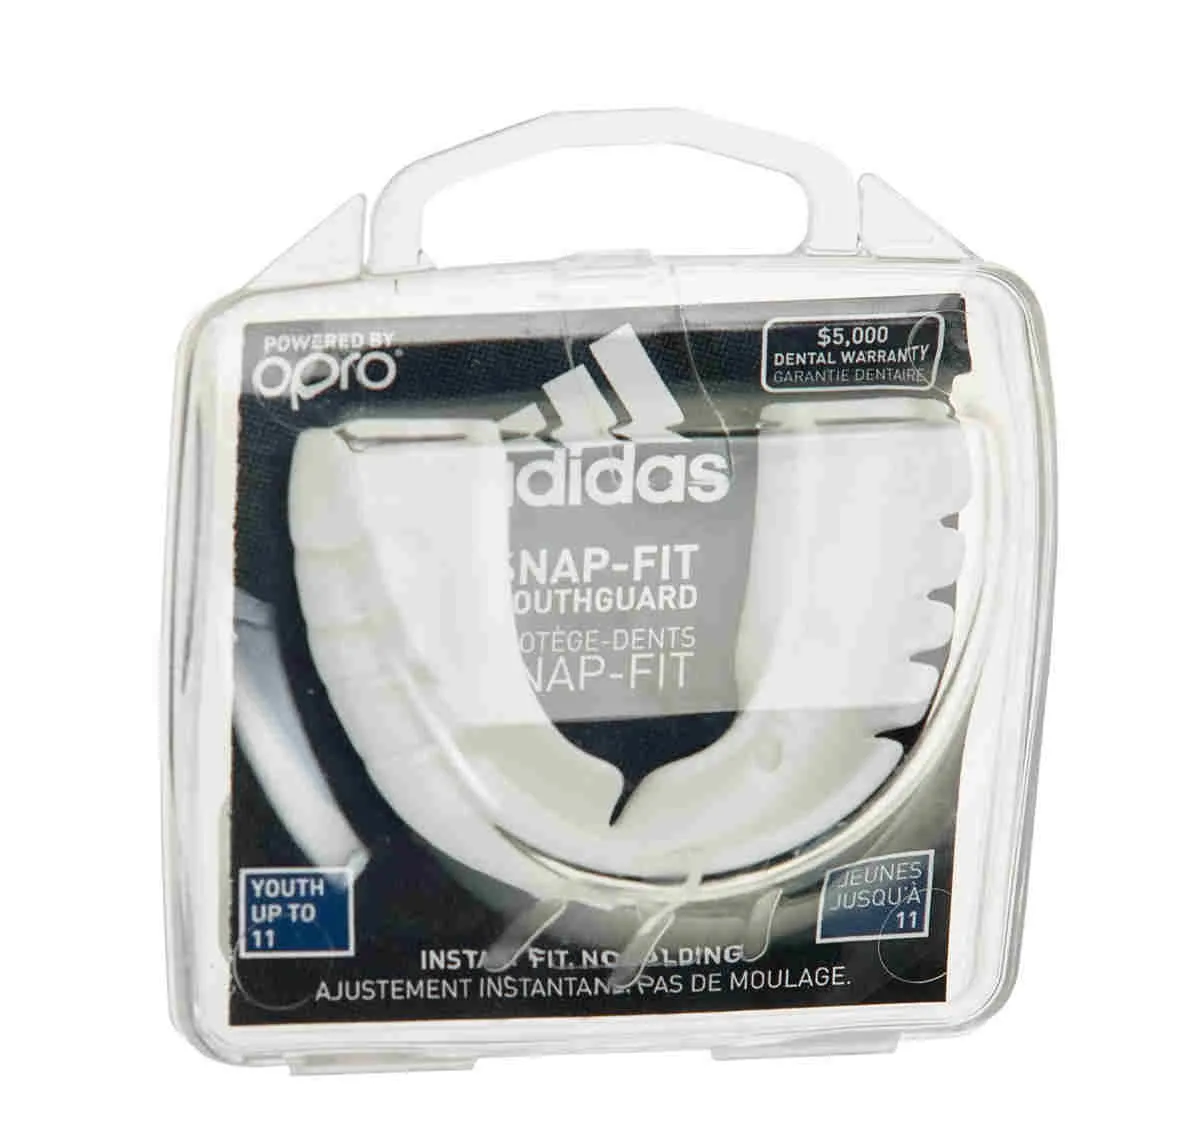 Protège-dents adidas OPRO SnapFit Senior blanc